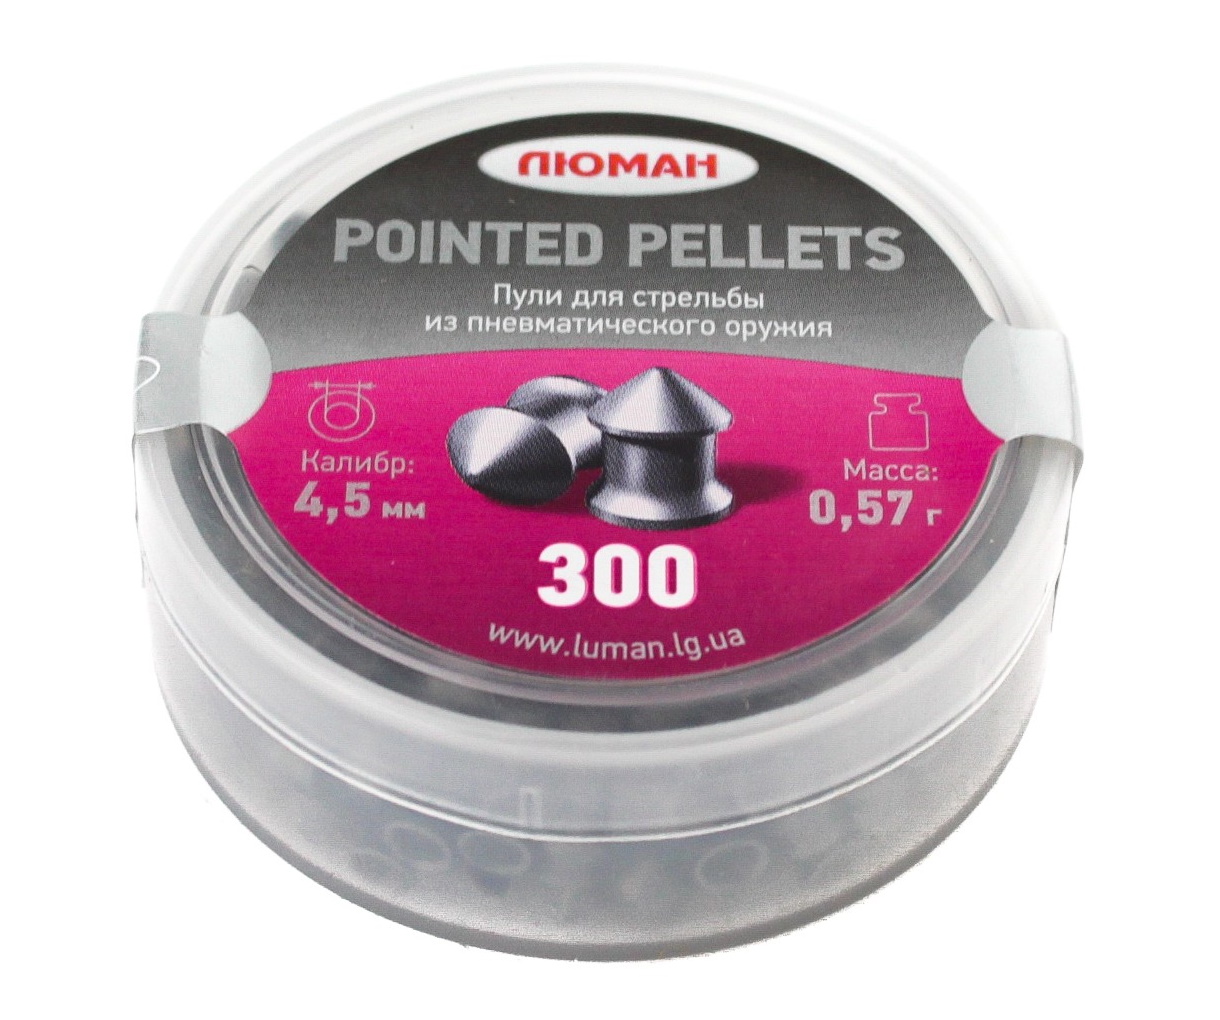 Пули «Люман» Pointed pellets 4,5 мм, 0,57 г (300 штук)